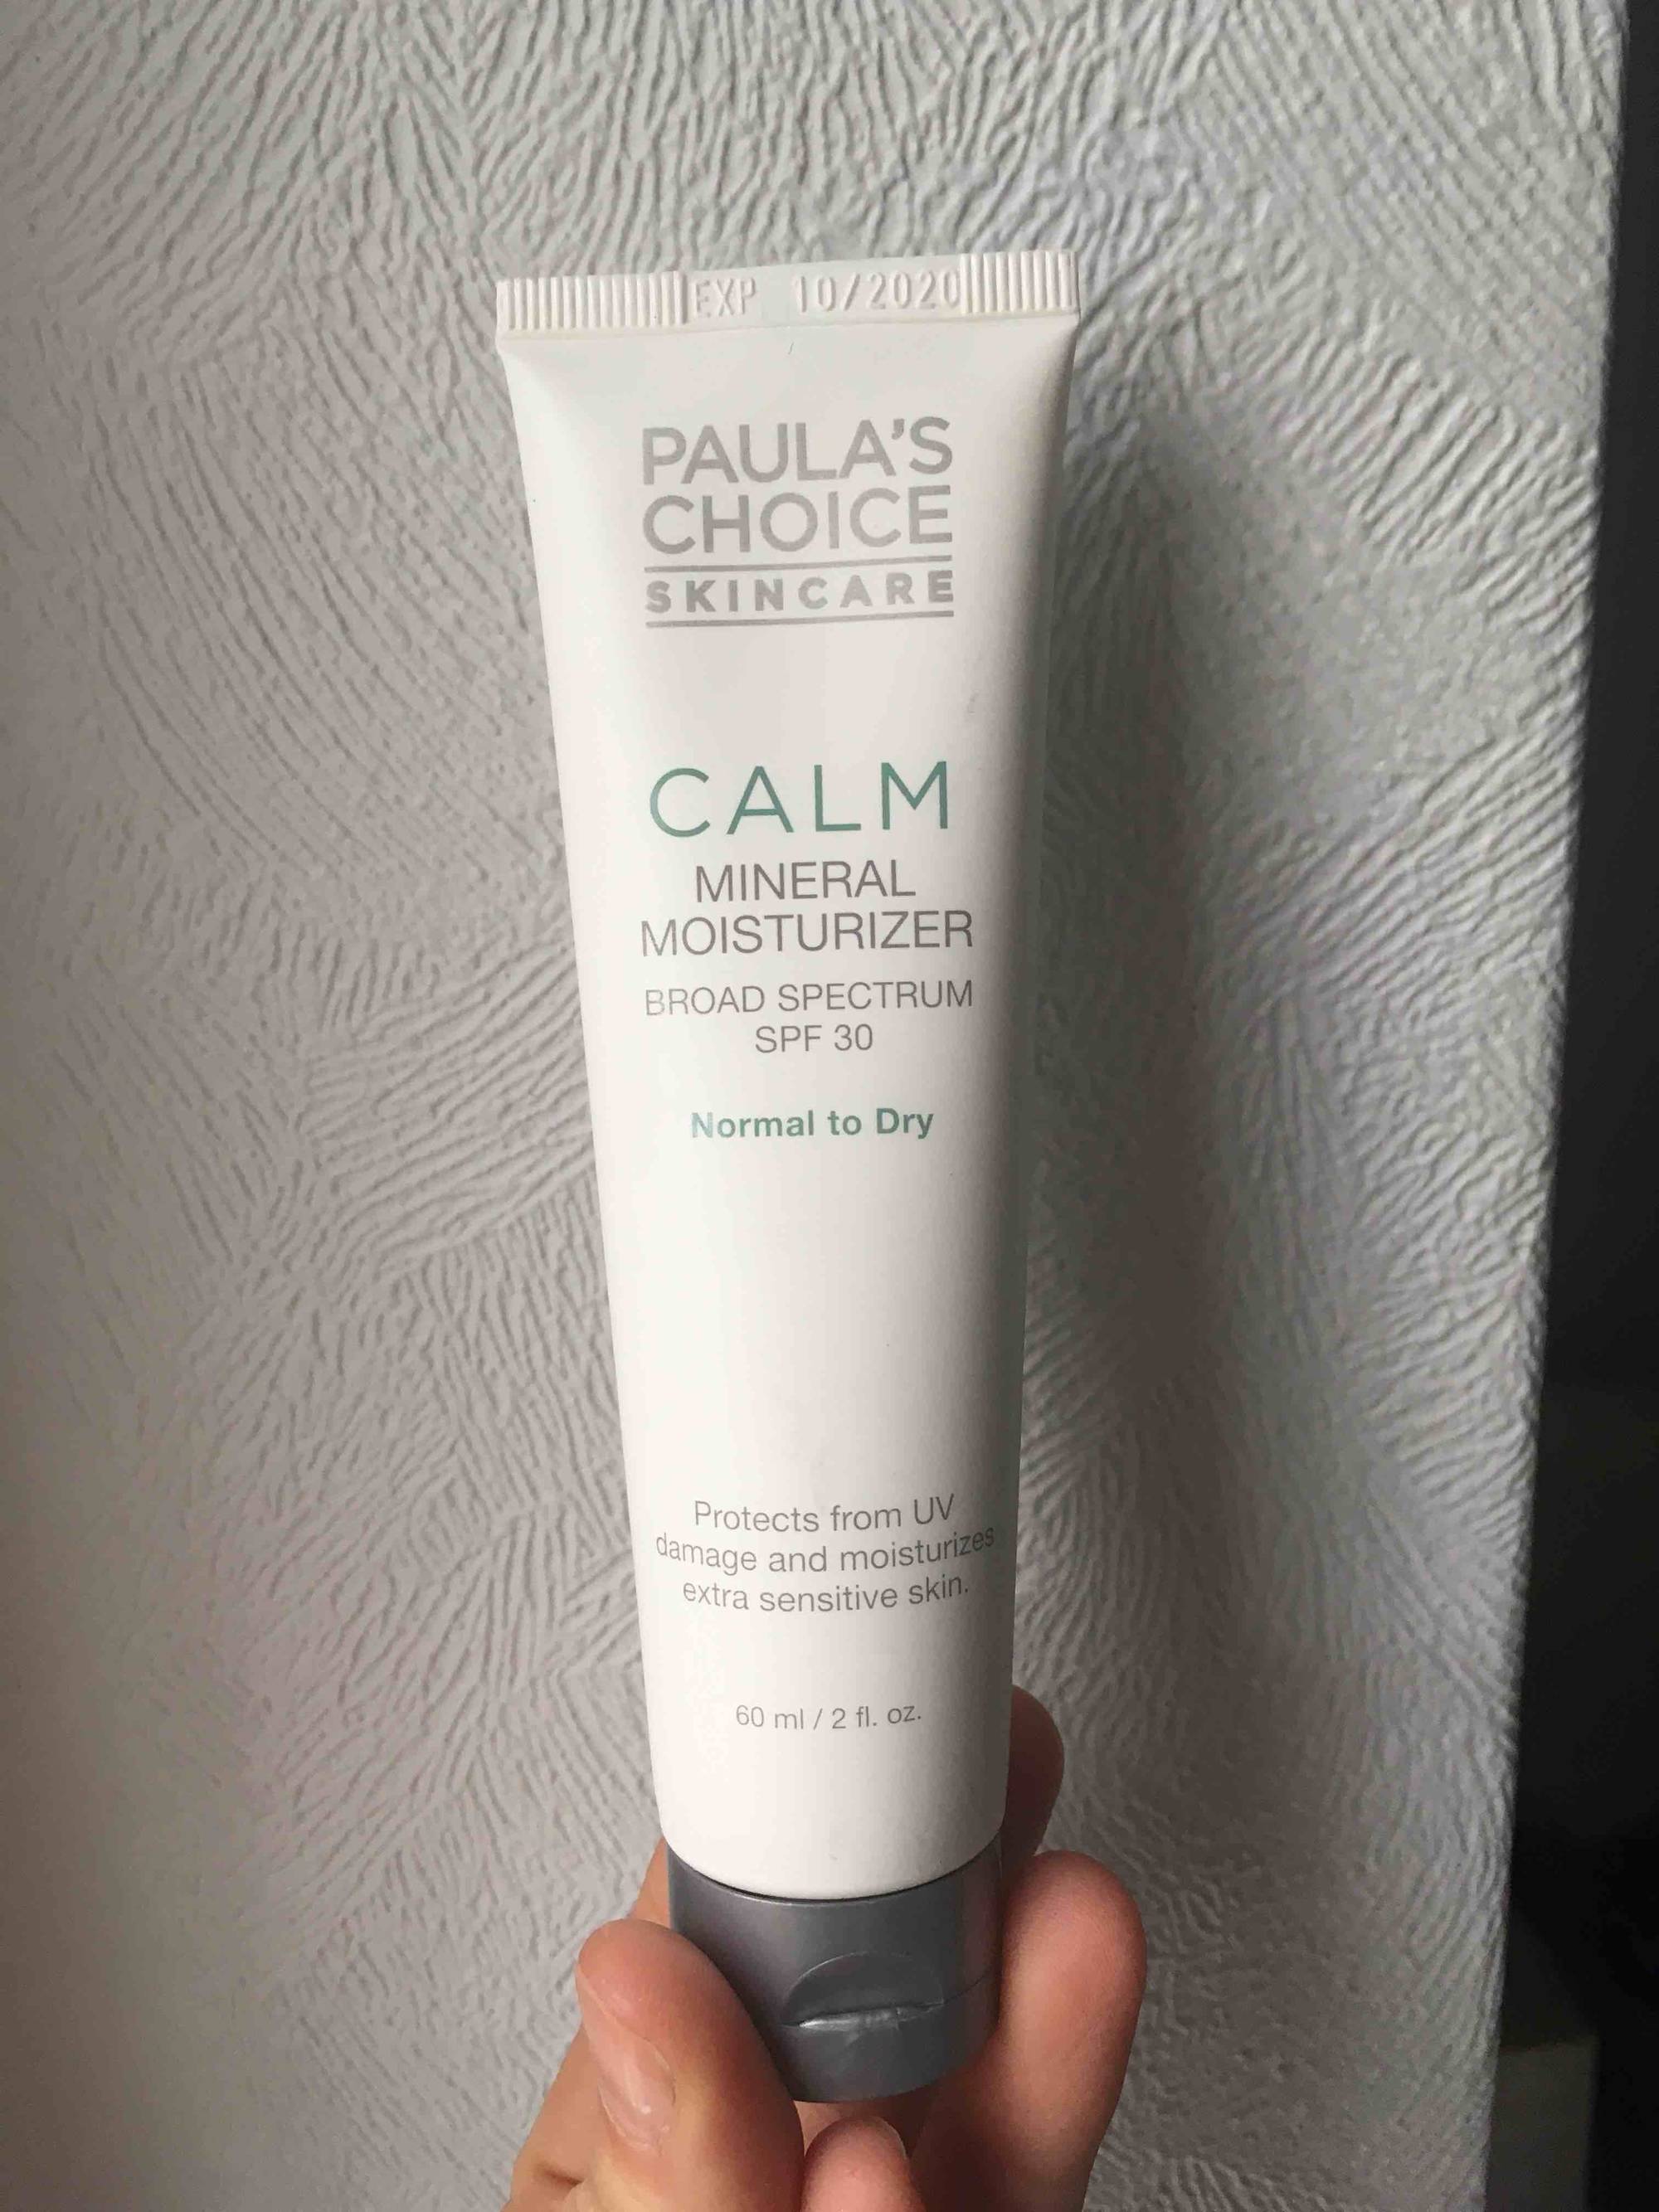 PAULA'S CHOISE - Skincare calm - Mineral moisturizer broad spectrum spf 30